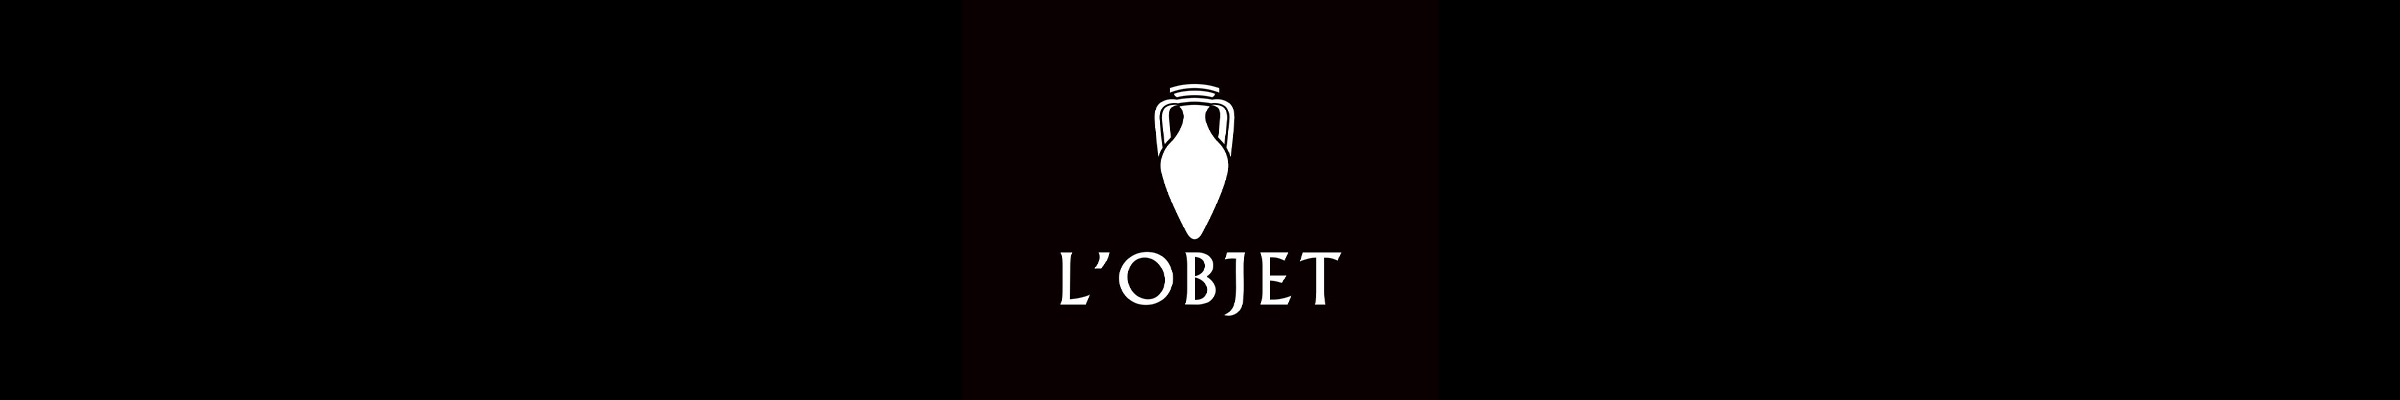 lobjet-banner